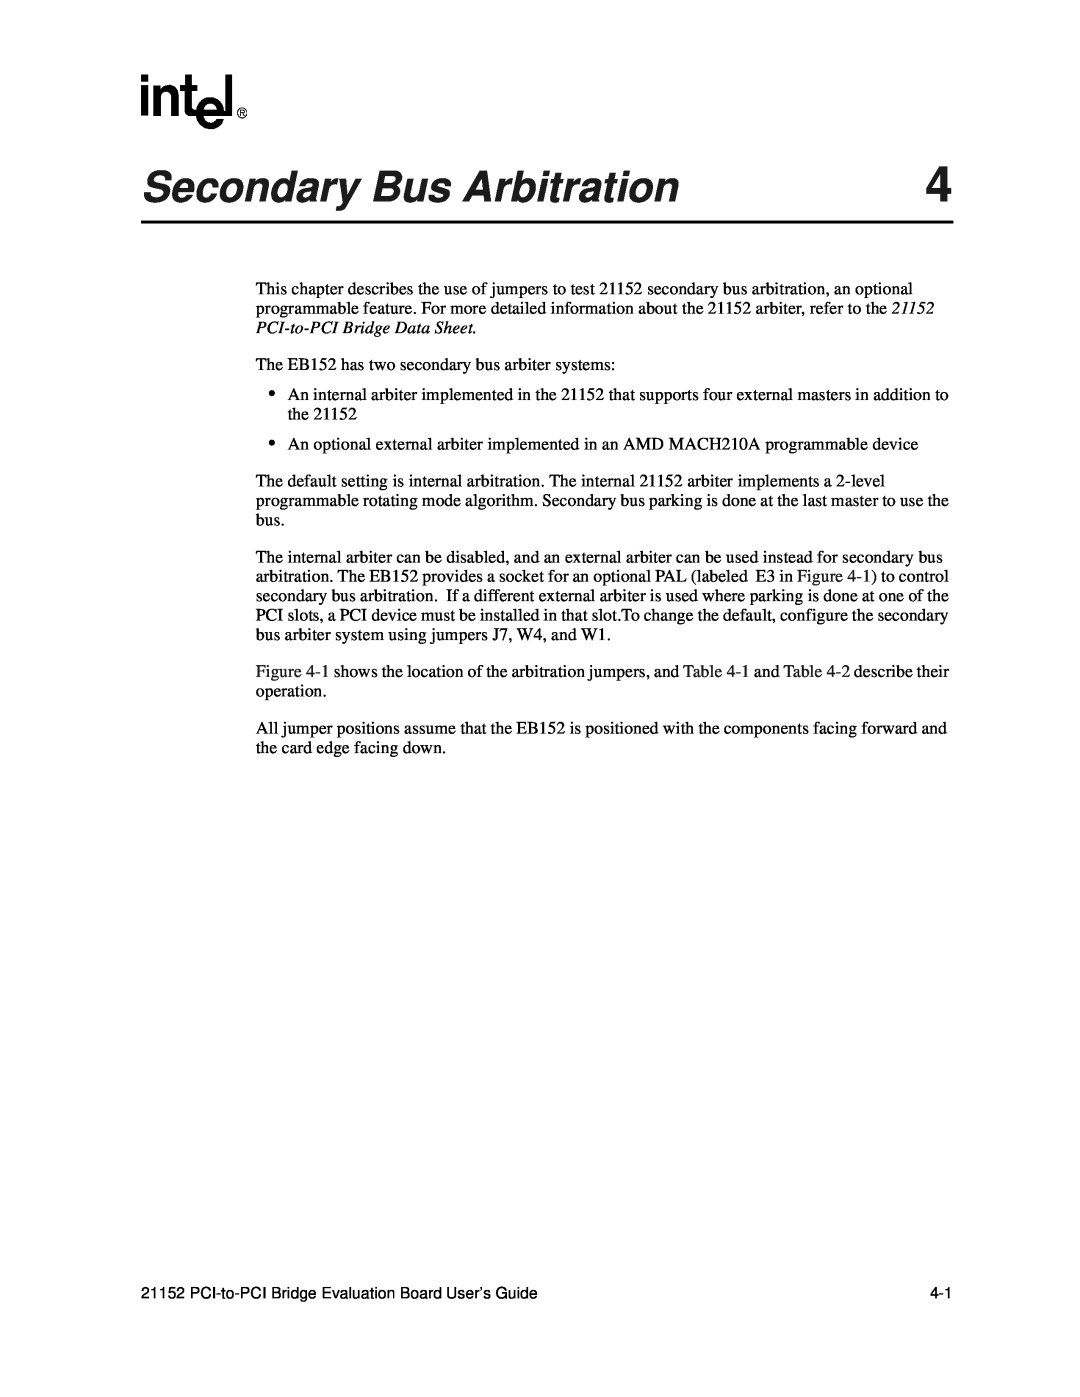 Intel 21152 manual Secondary Bus Arbitration 